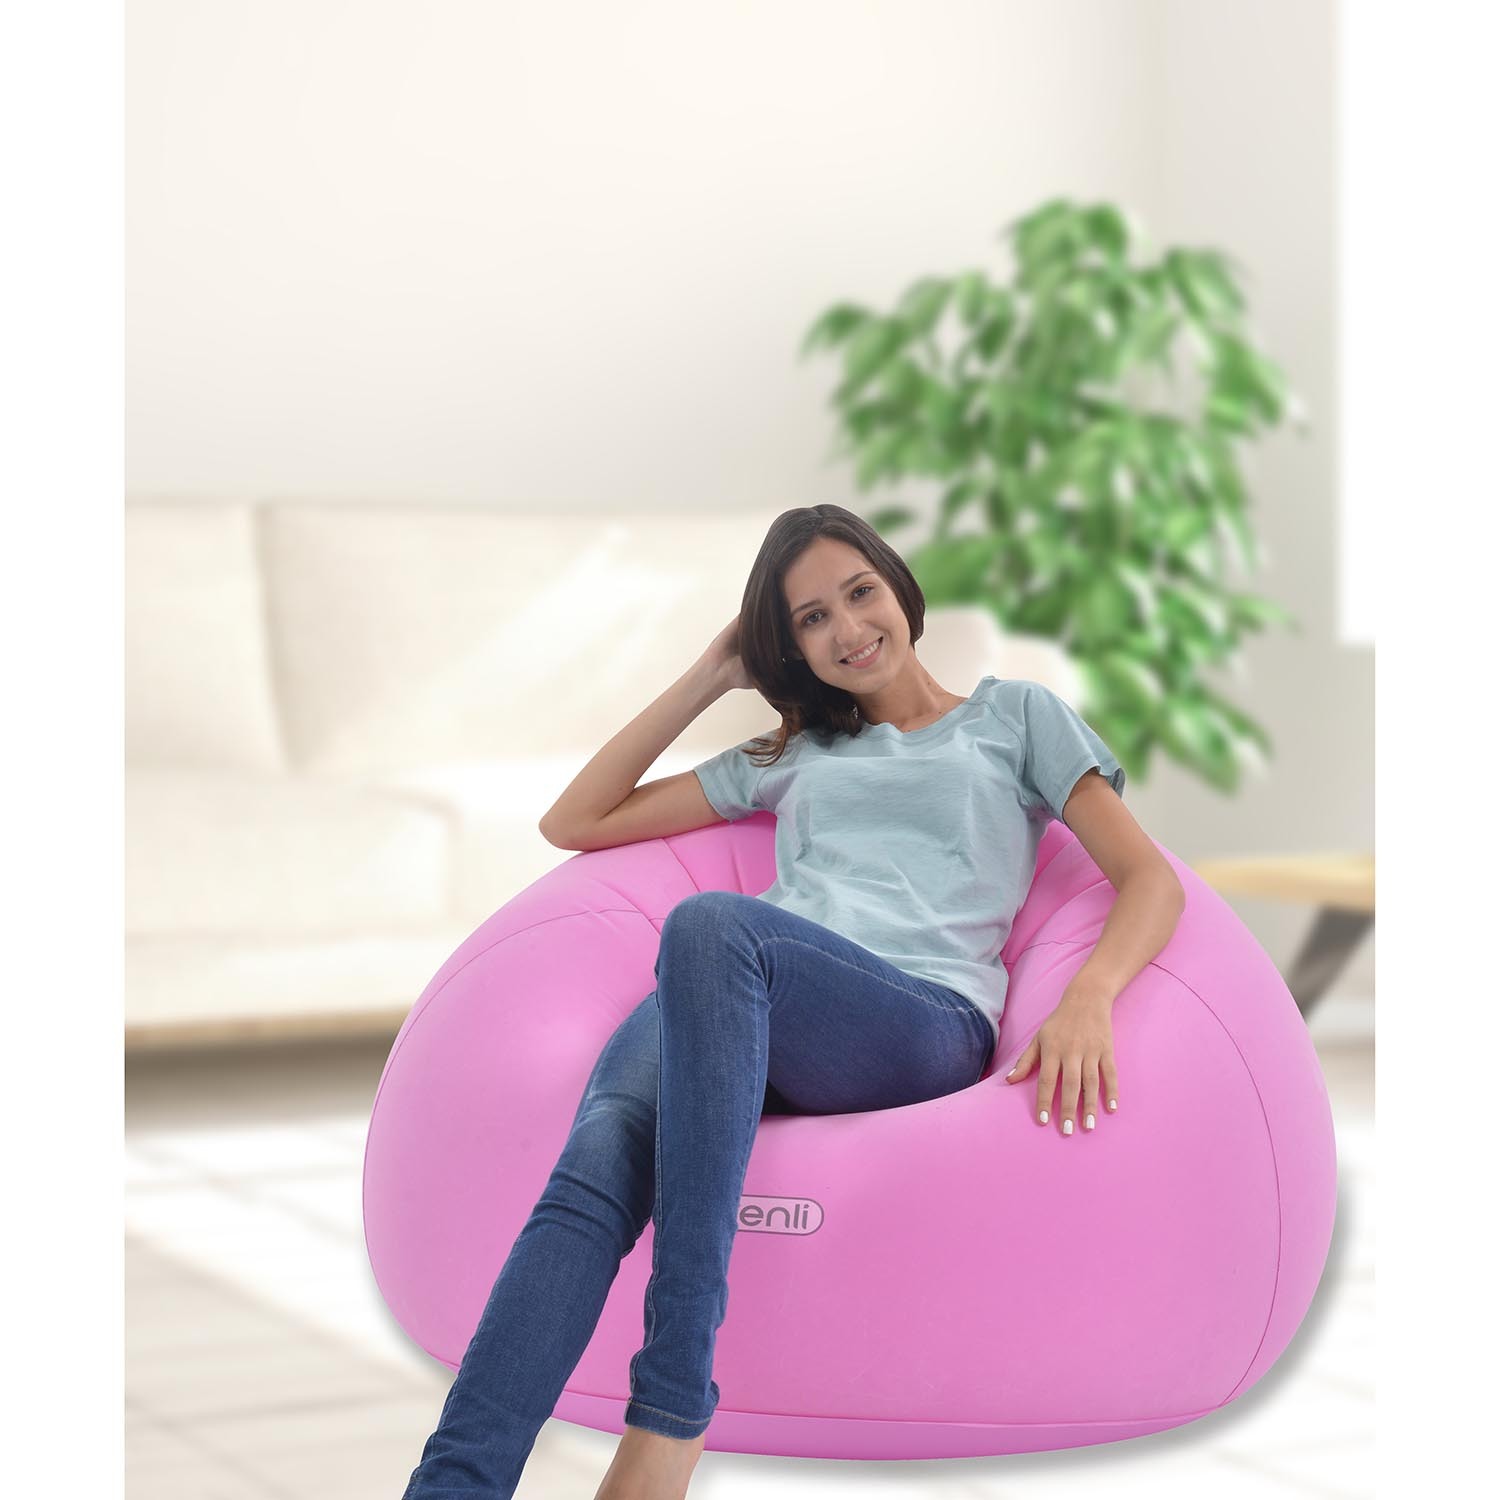 Avenli Inflatable Vinyl Chair Image 4